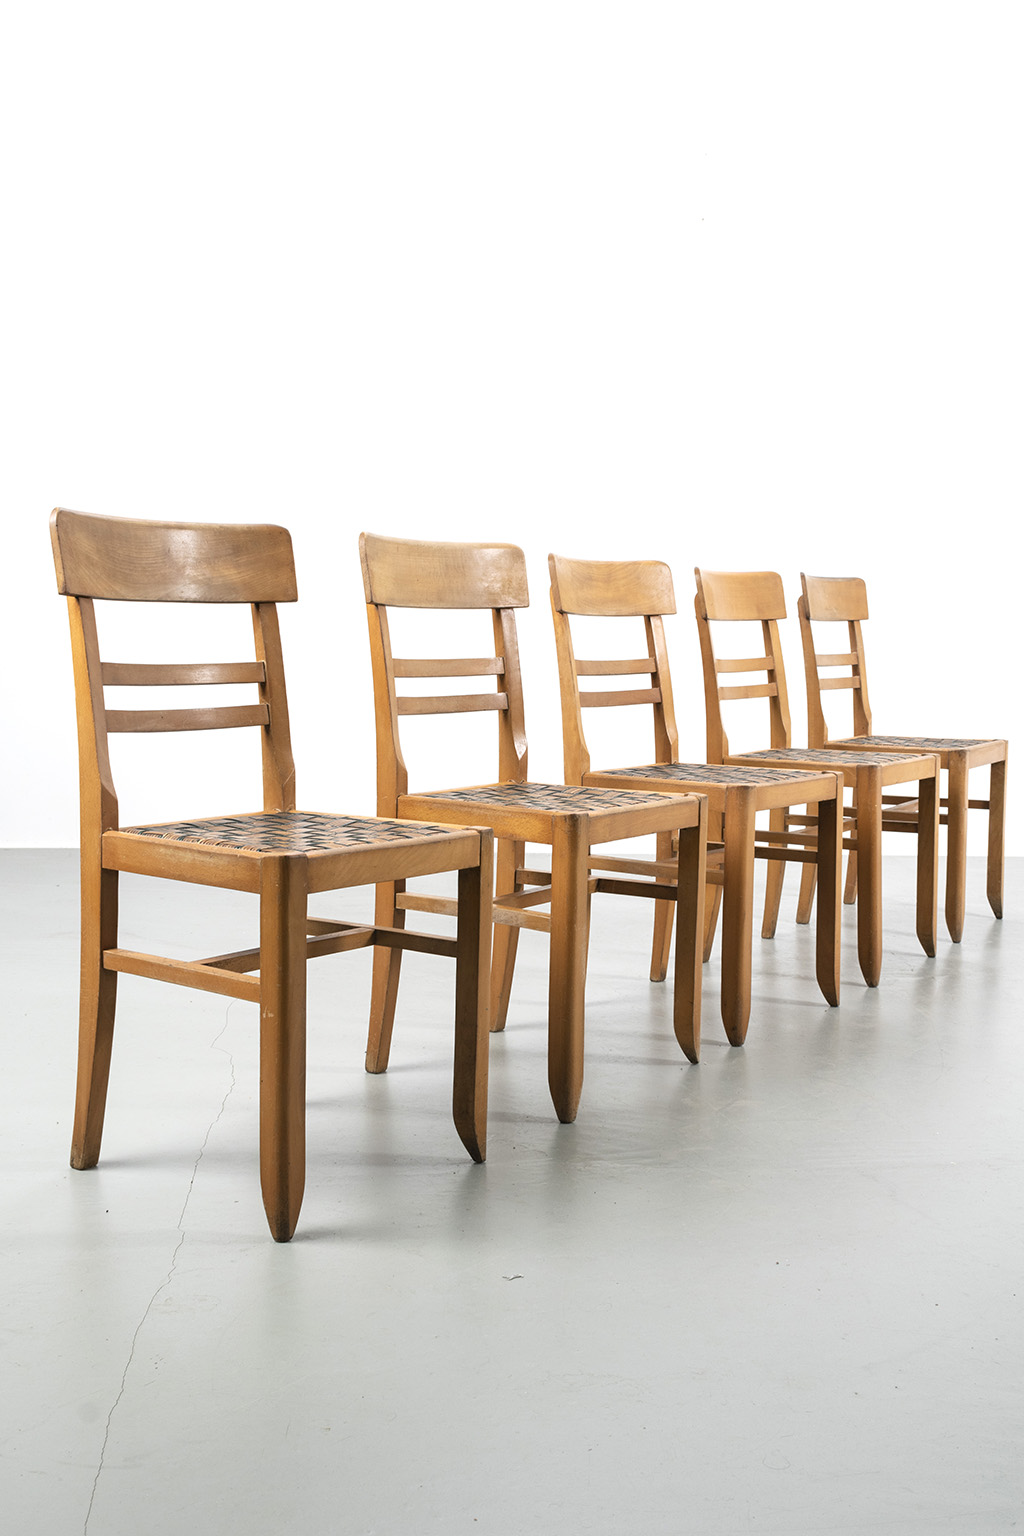 handelaar fundament salami Set van 5 houten café stoelen - Decennia Design